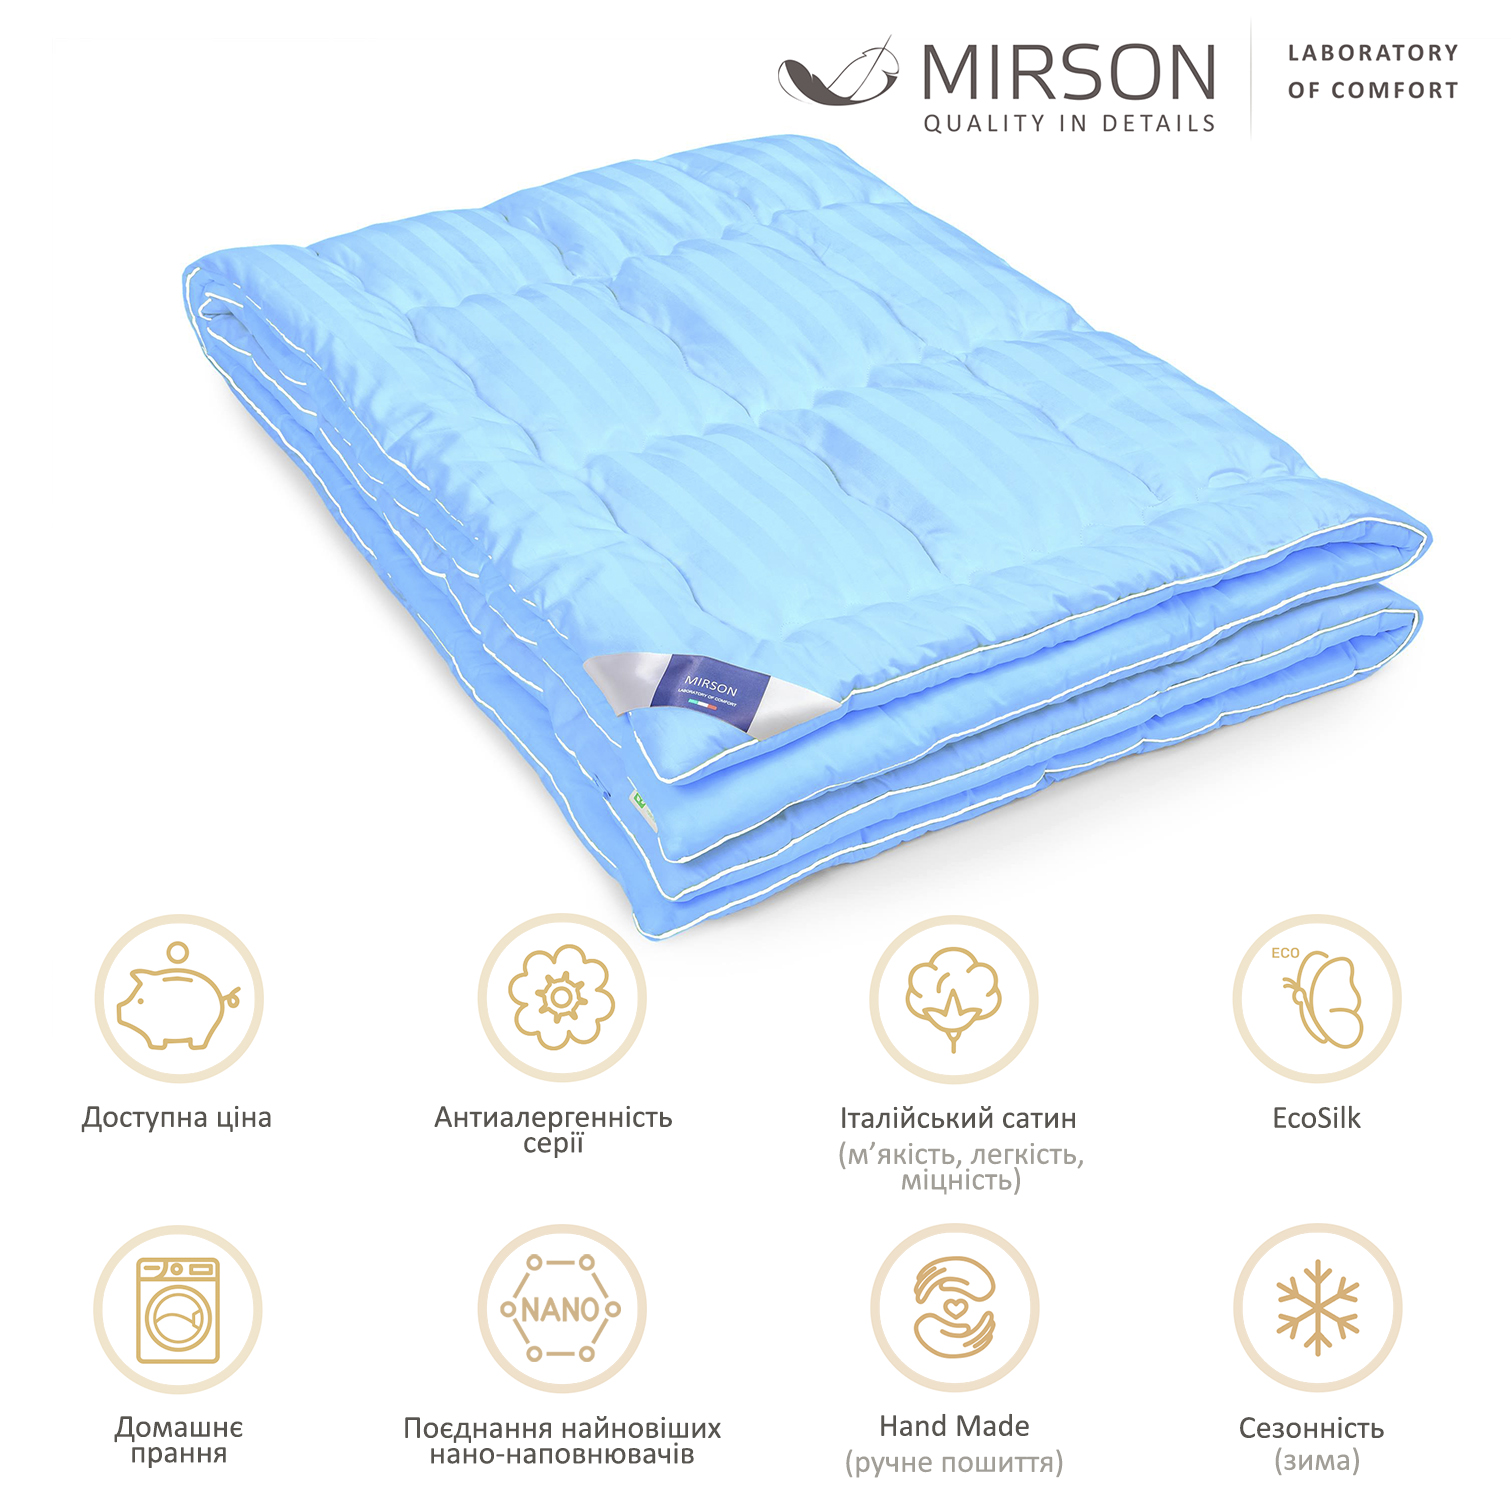 Одеяло антиаллергенное MirSon Valentino Premium Hand Made №067, зимнее, 155x215 см, голубое - фото 5